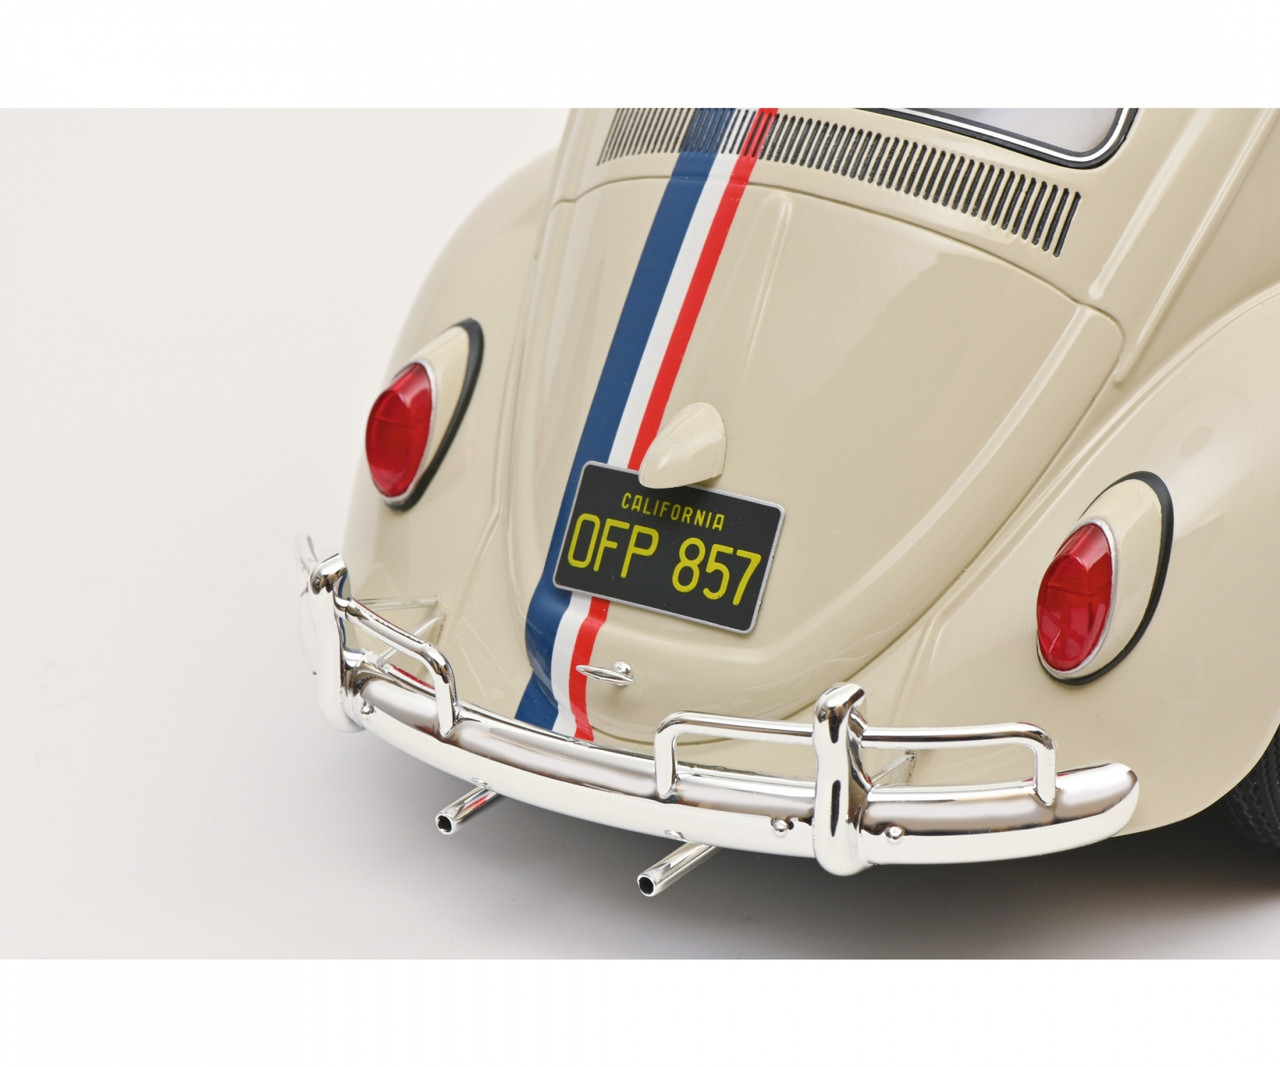 1/12 Schuco Volkswagen VW Beetle Rallye #53 Herbie (Cream White) Diecast Car Model